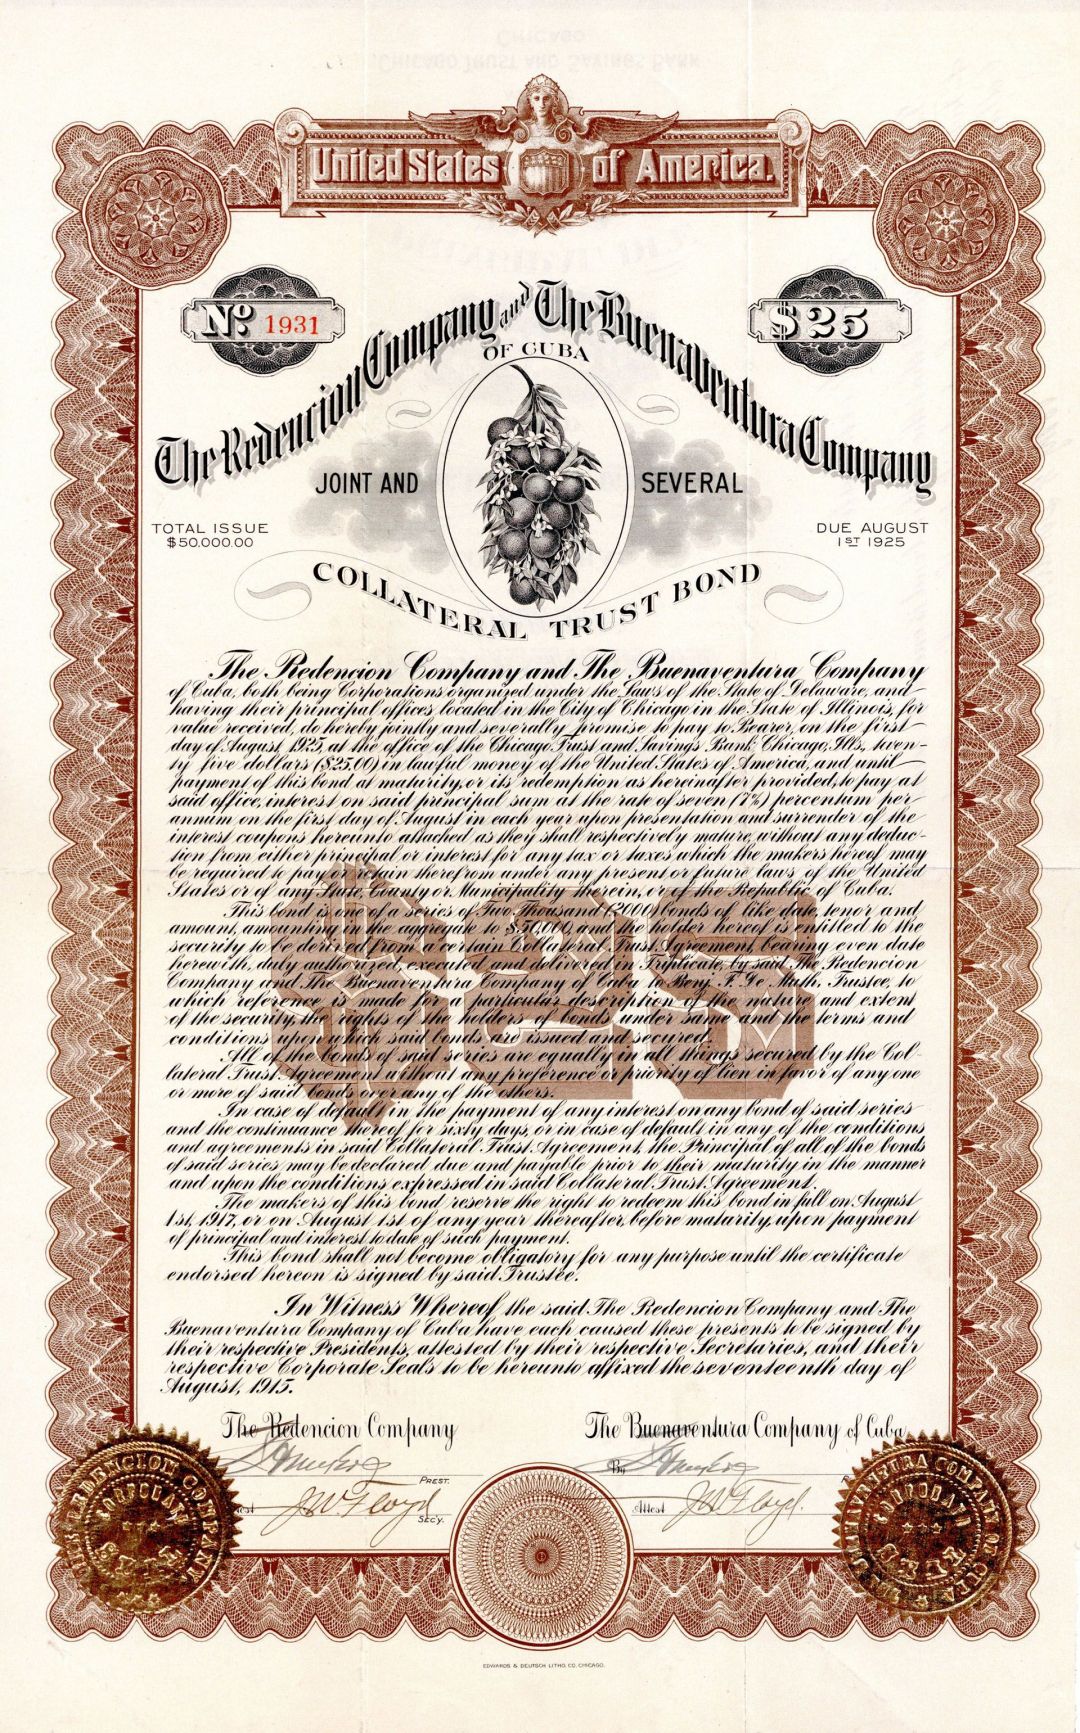 Redencion Co. and The Buenaventura Co. of Cuba - 1915 dated $25 Bond